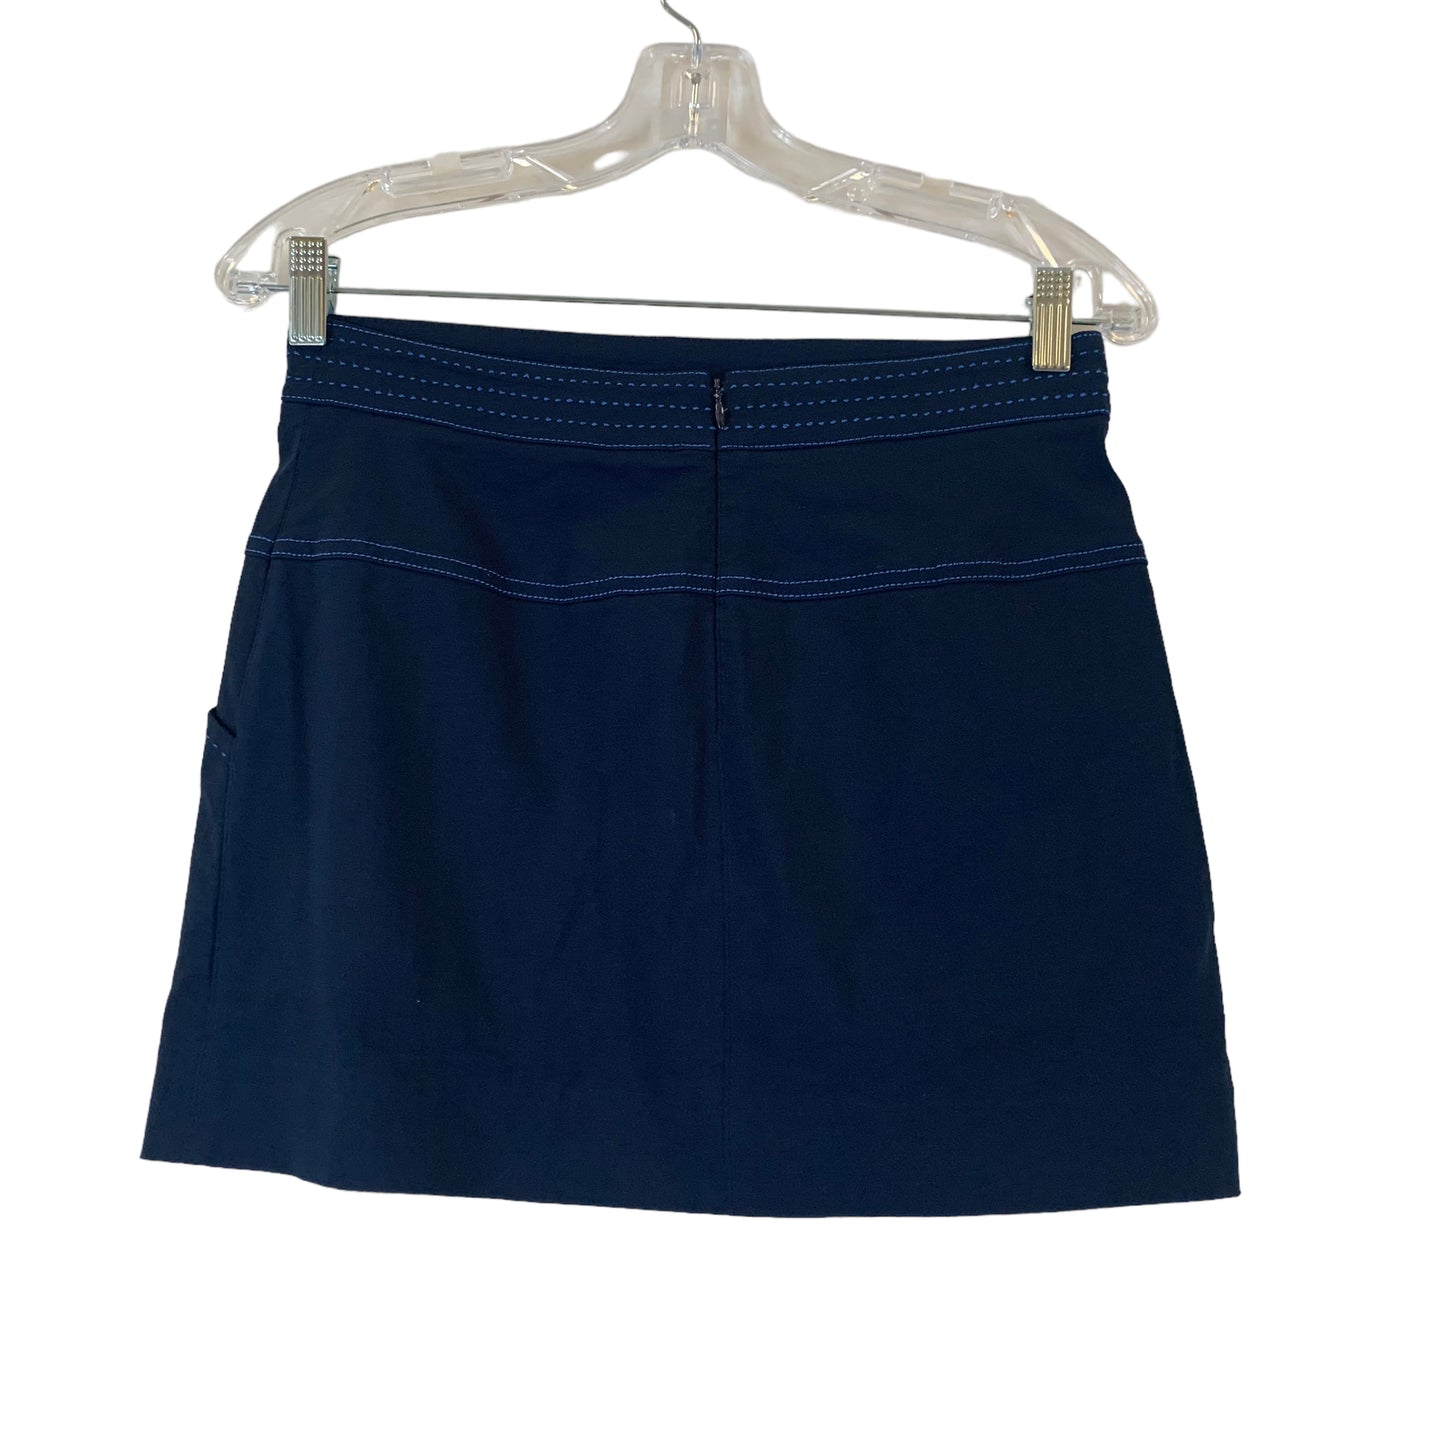 Athletic Skirt Skort By J Mclaughlin  Size: Xs